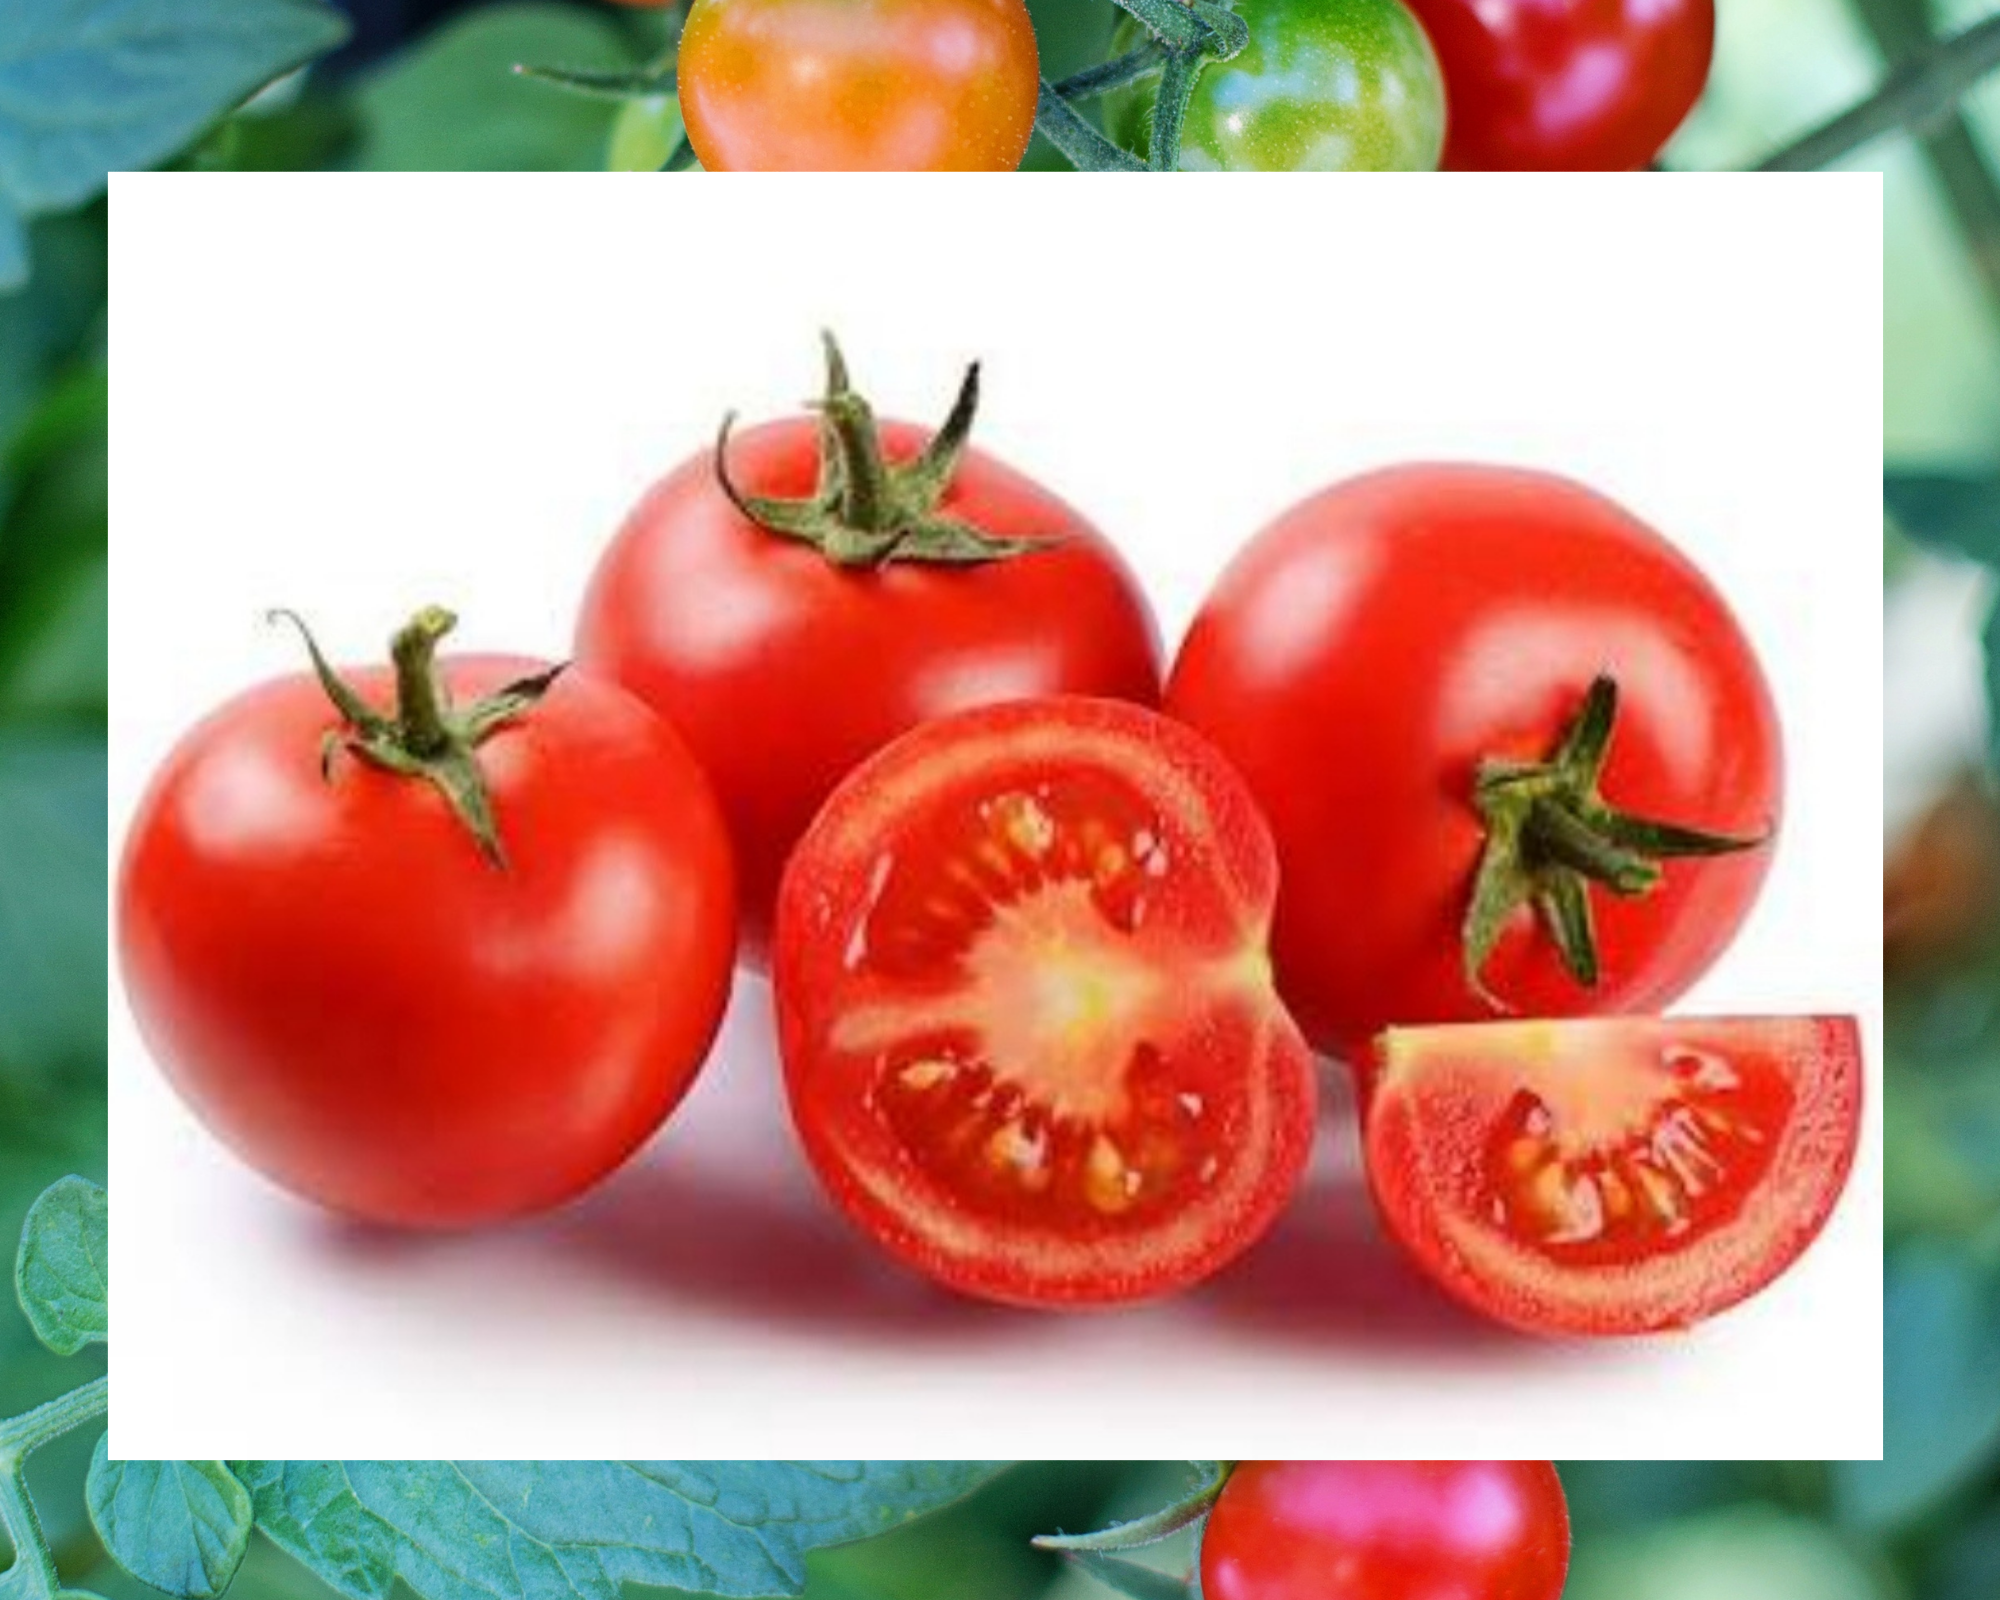 Health benefits of tomatoes.